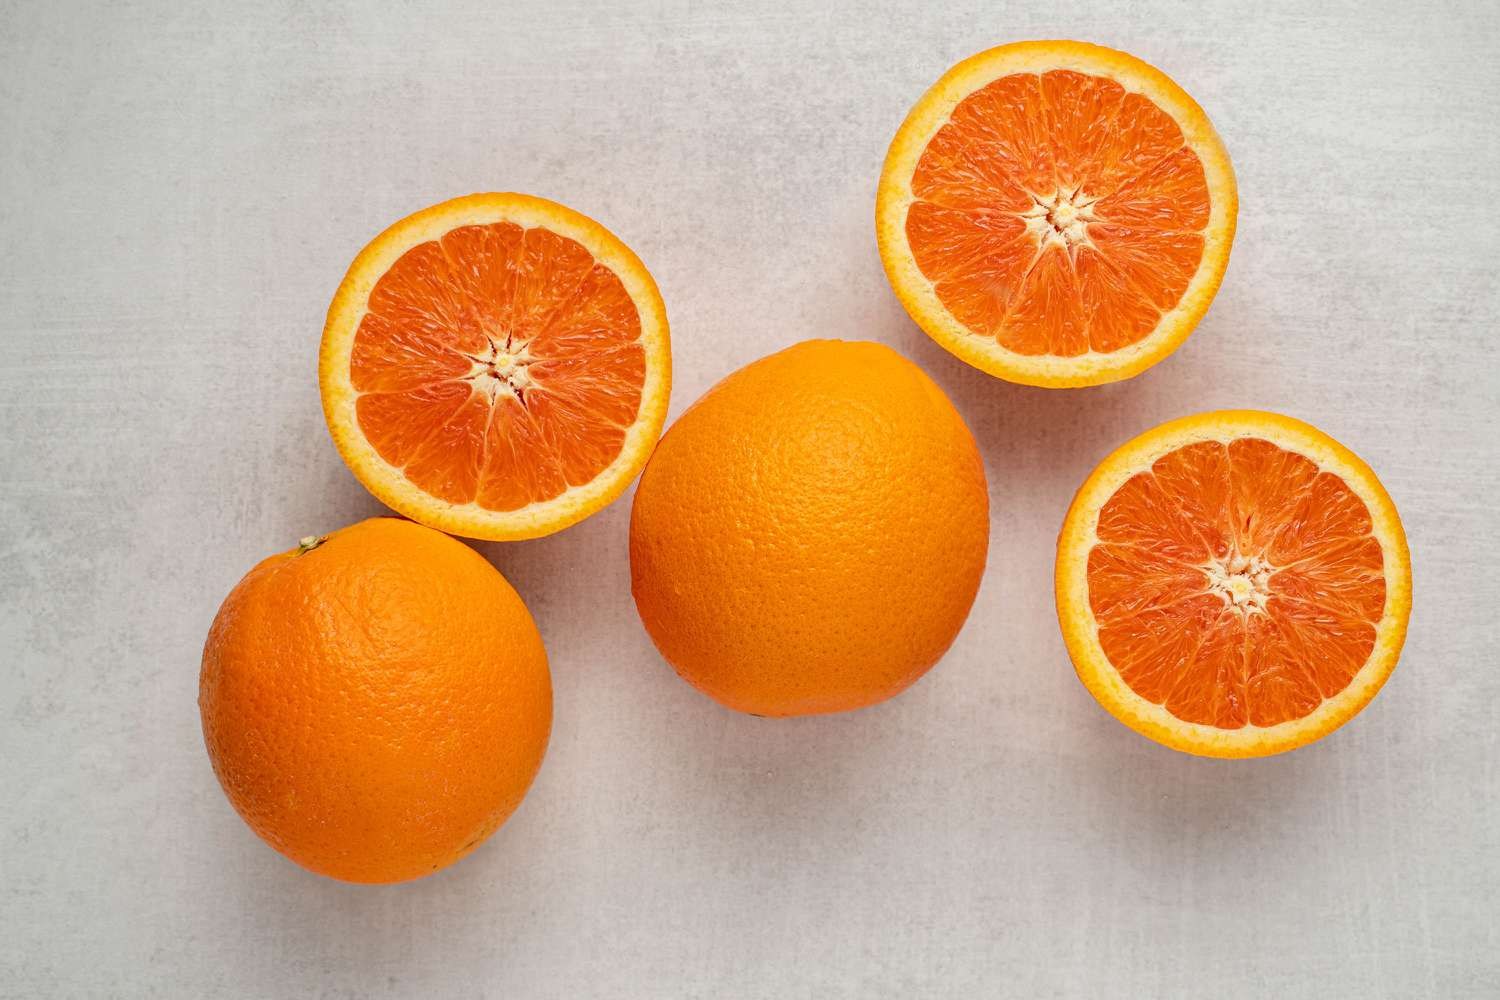 20-cara-cara-orange-nutrition-facts